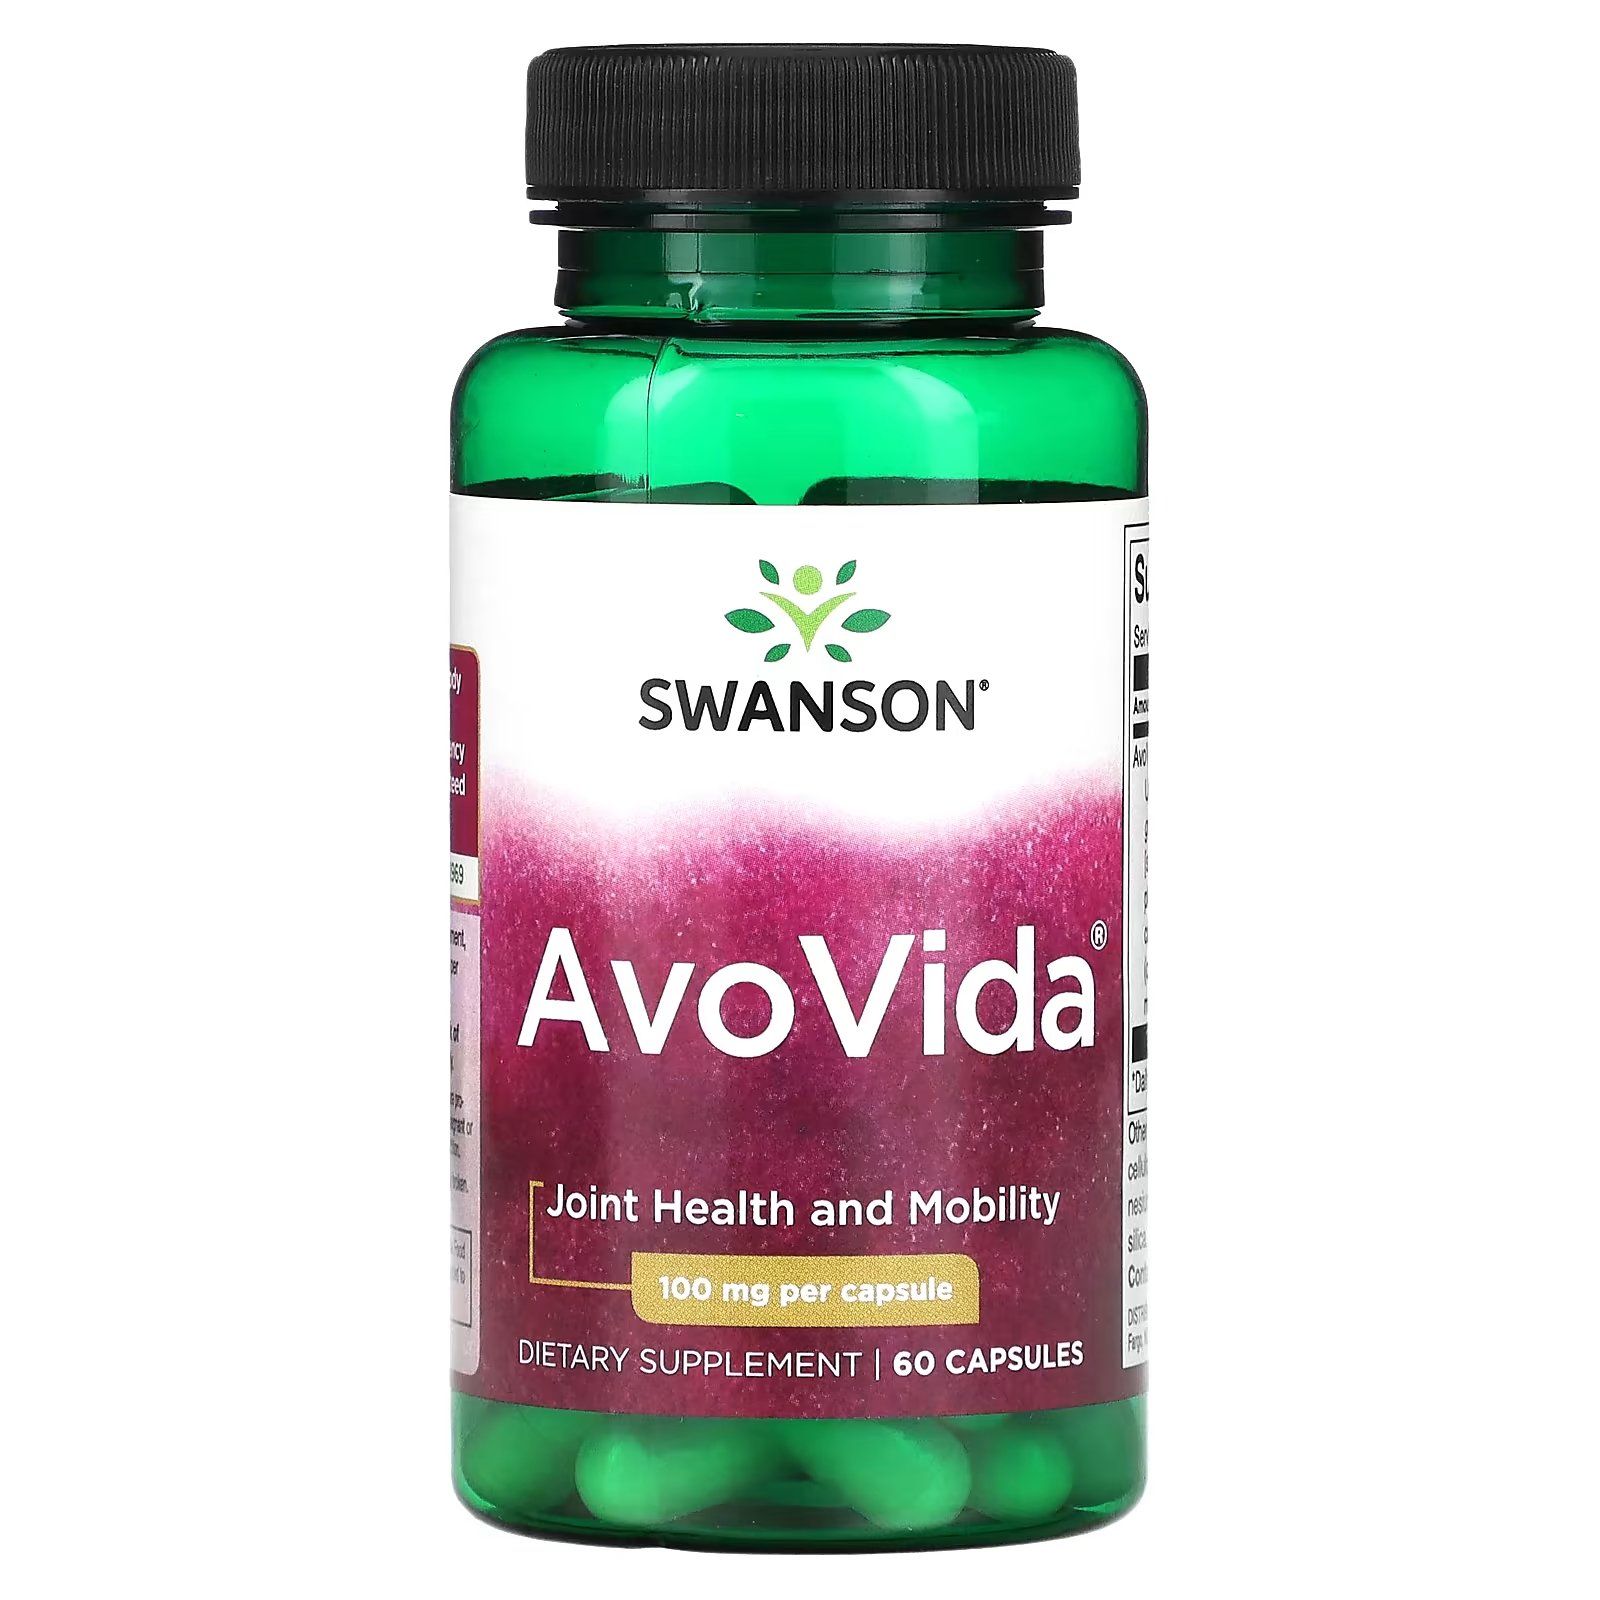 Пищевая добавка Swanson AvoVida с авакадо, 60 капсул